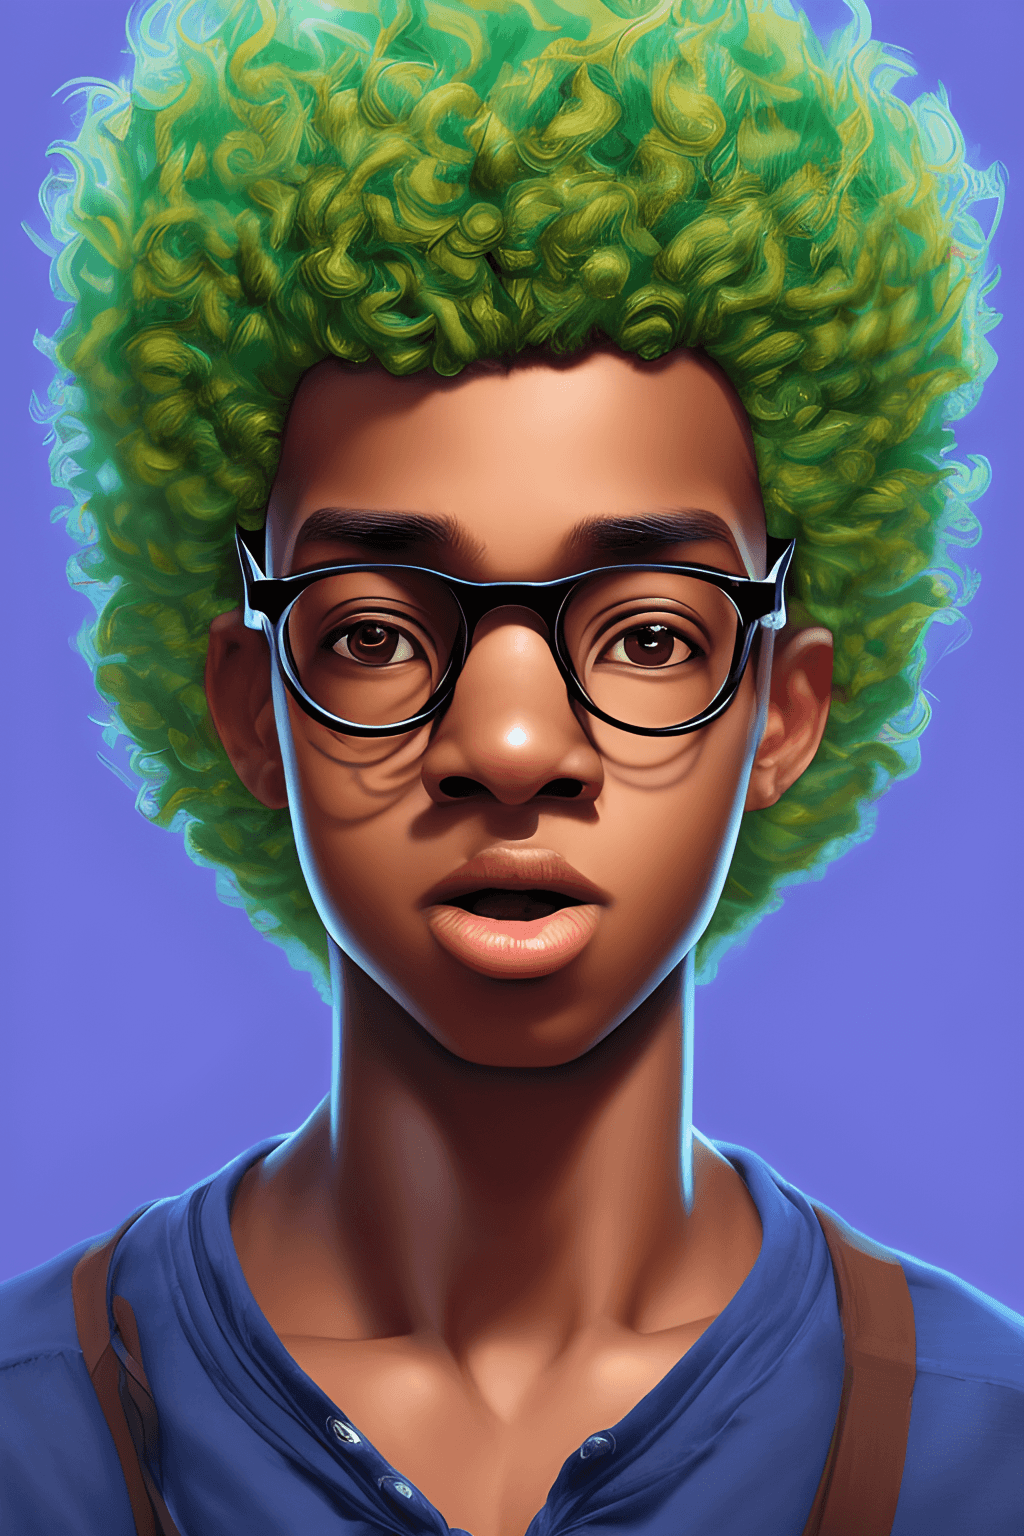 Chibi African Boy Avatar Graphic · Creative Fabrica